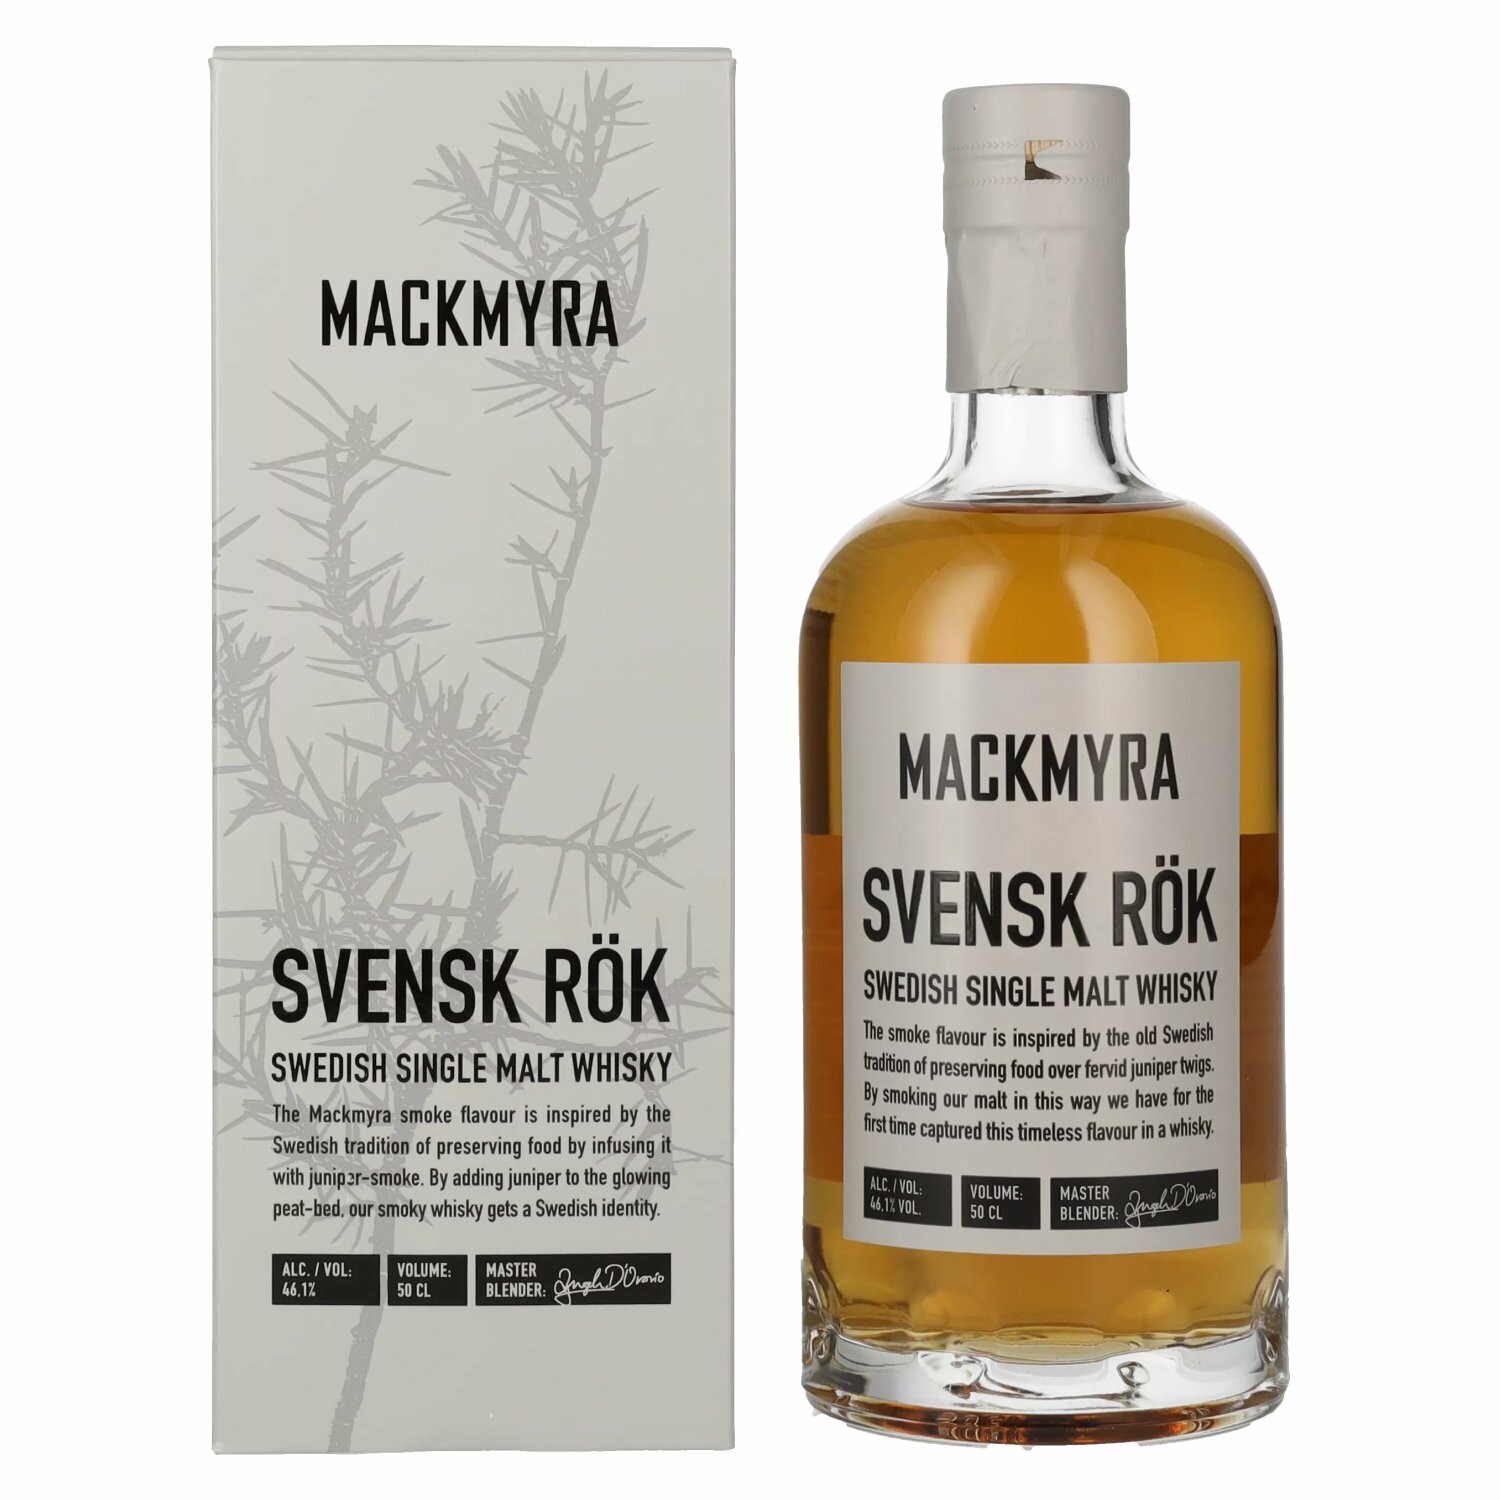 Mackmyra Svensk Rök Svensk Single Malt Whisky 46,1% Vol. 0,5l in Giftbox